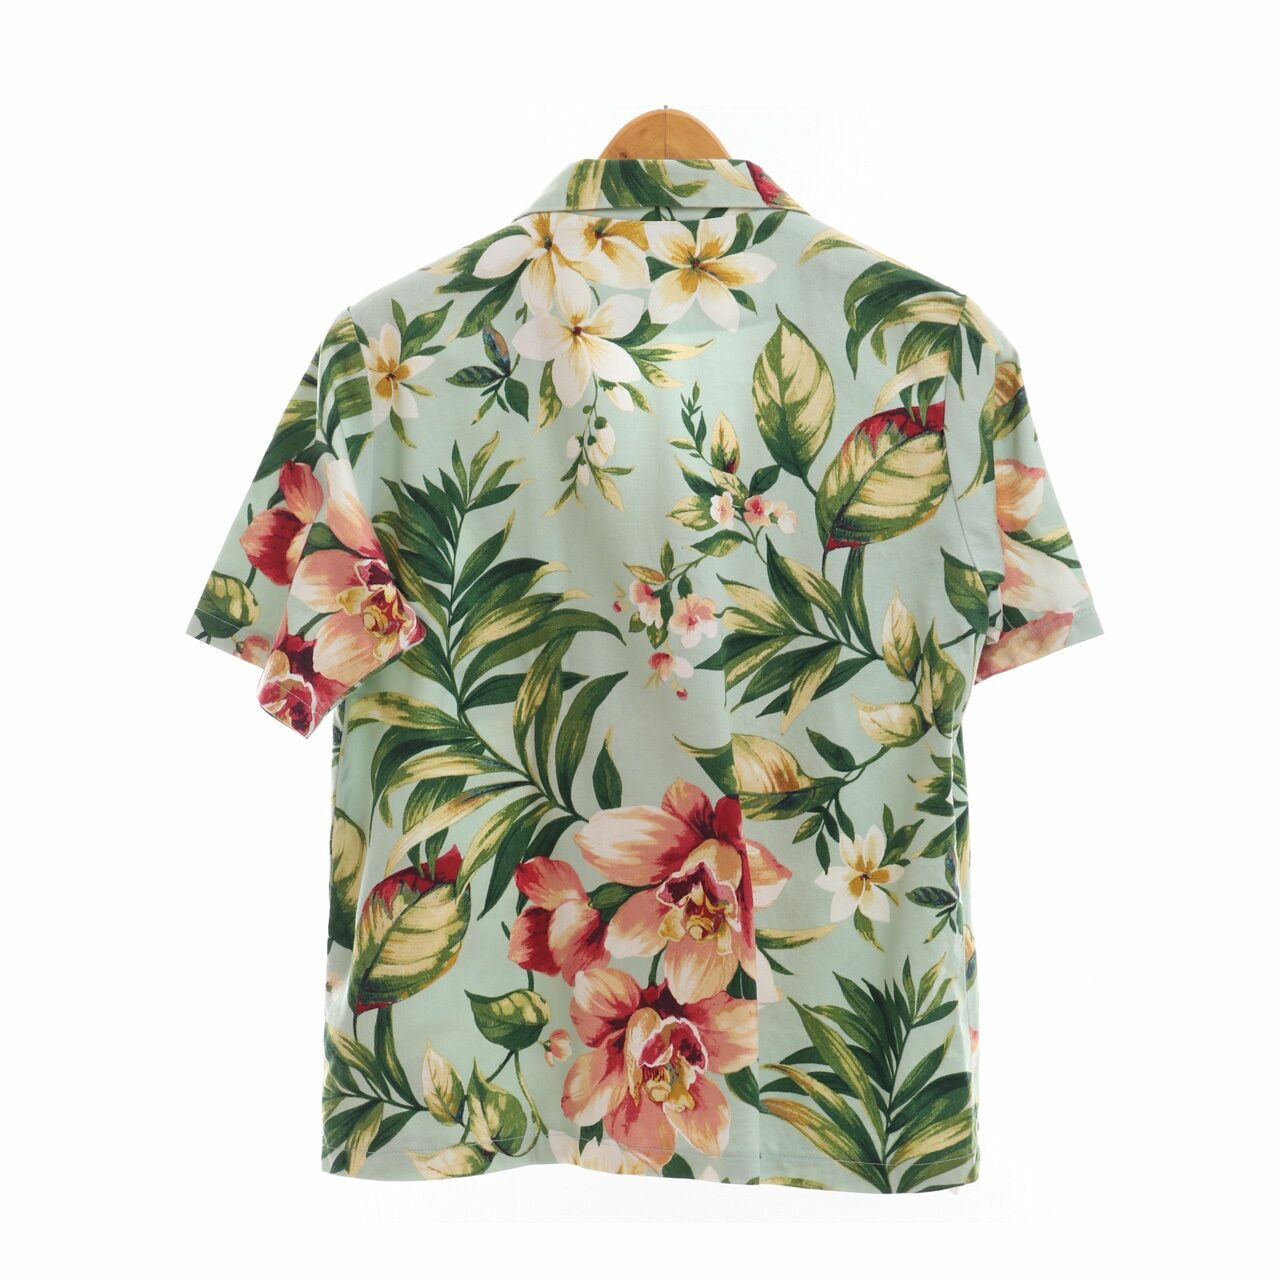 Argyle Oxford Green Floral Shirt